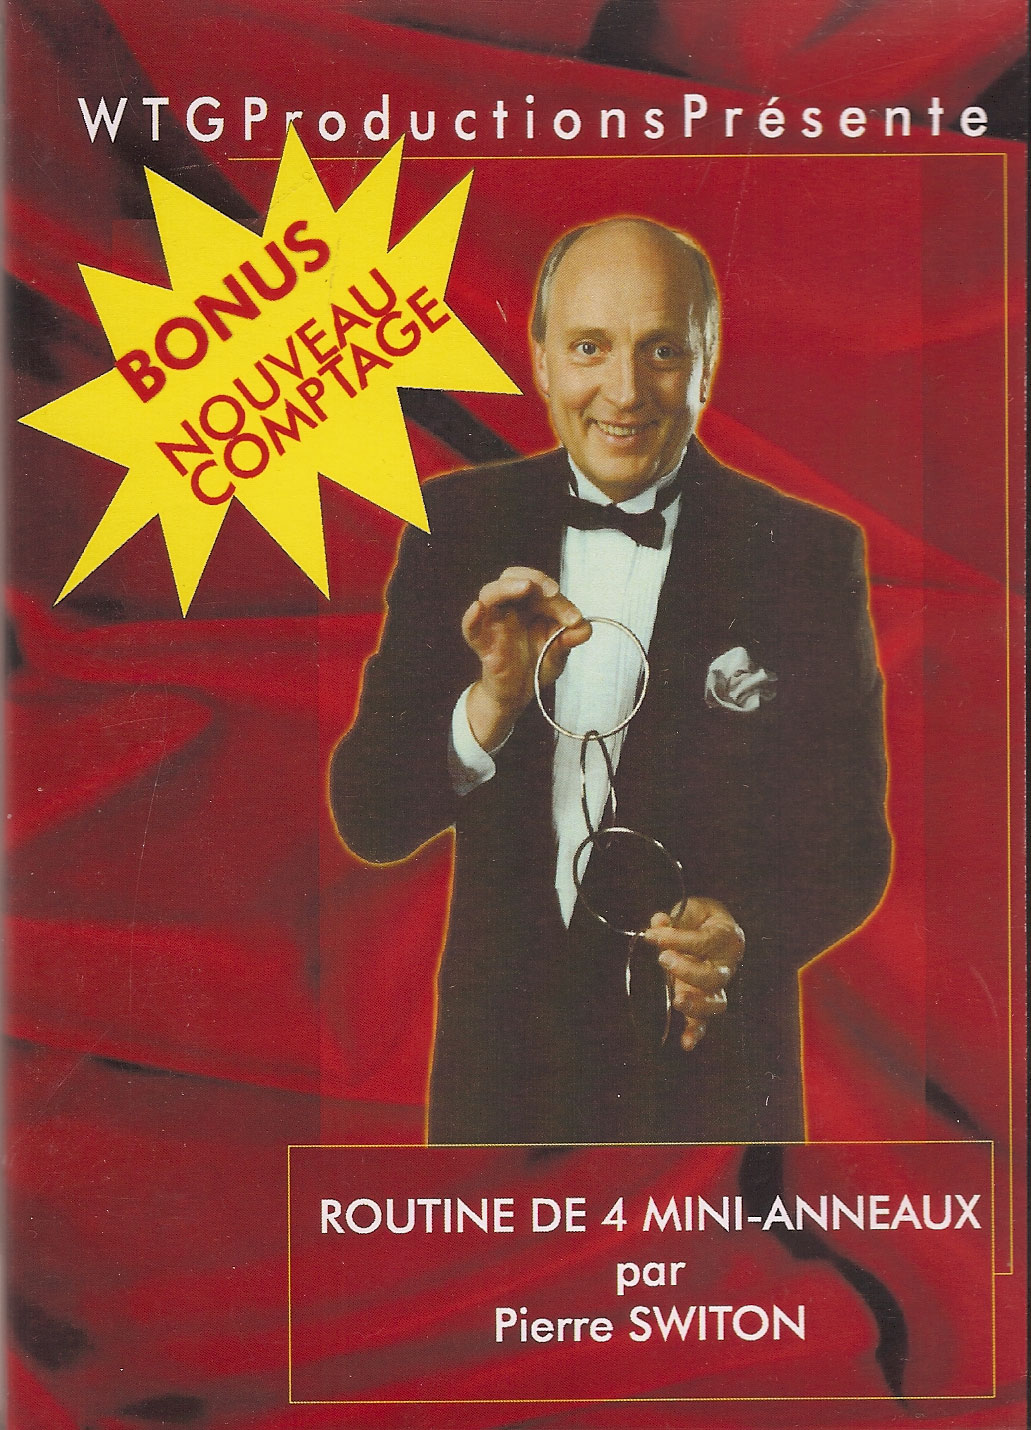 DVD "Routine de 4 Mini-anneaux" - Pierre Switon